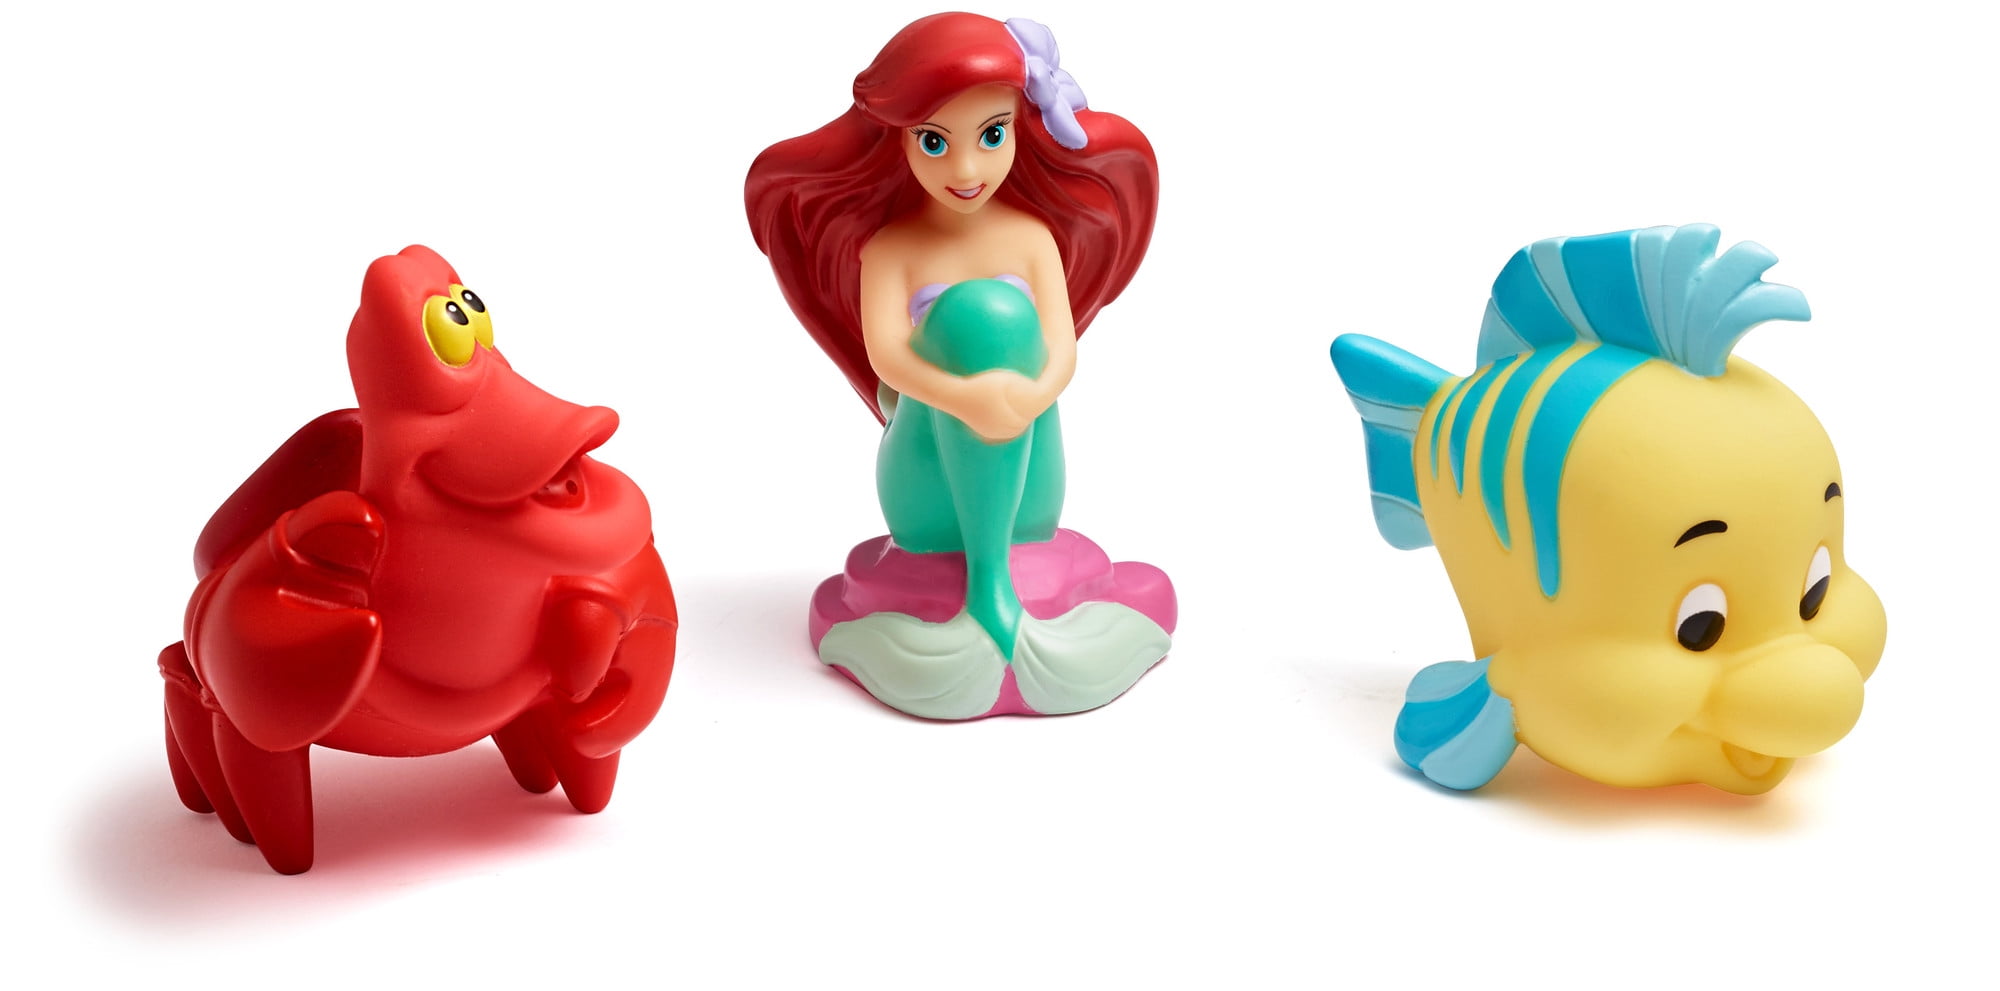 4 pc Fun Kit Disney "The Little Mermaid" New 